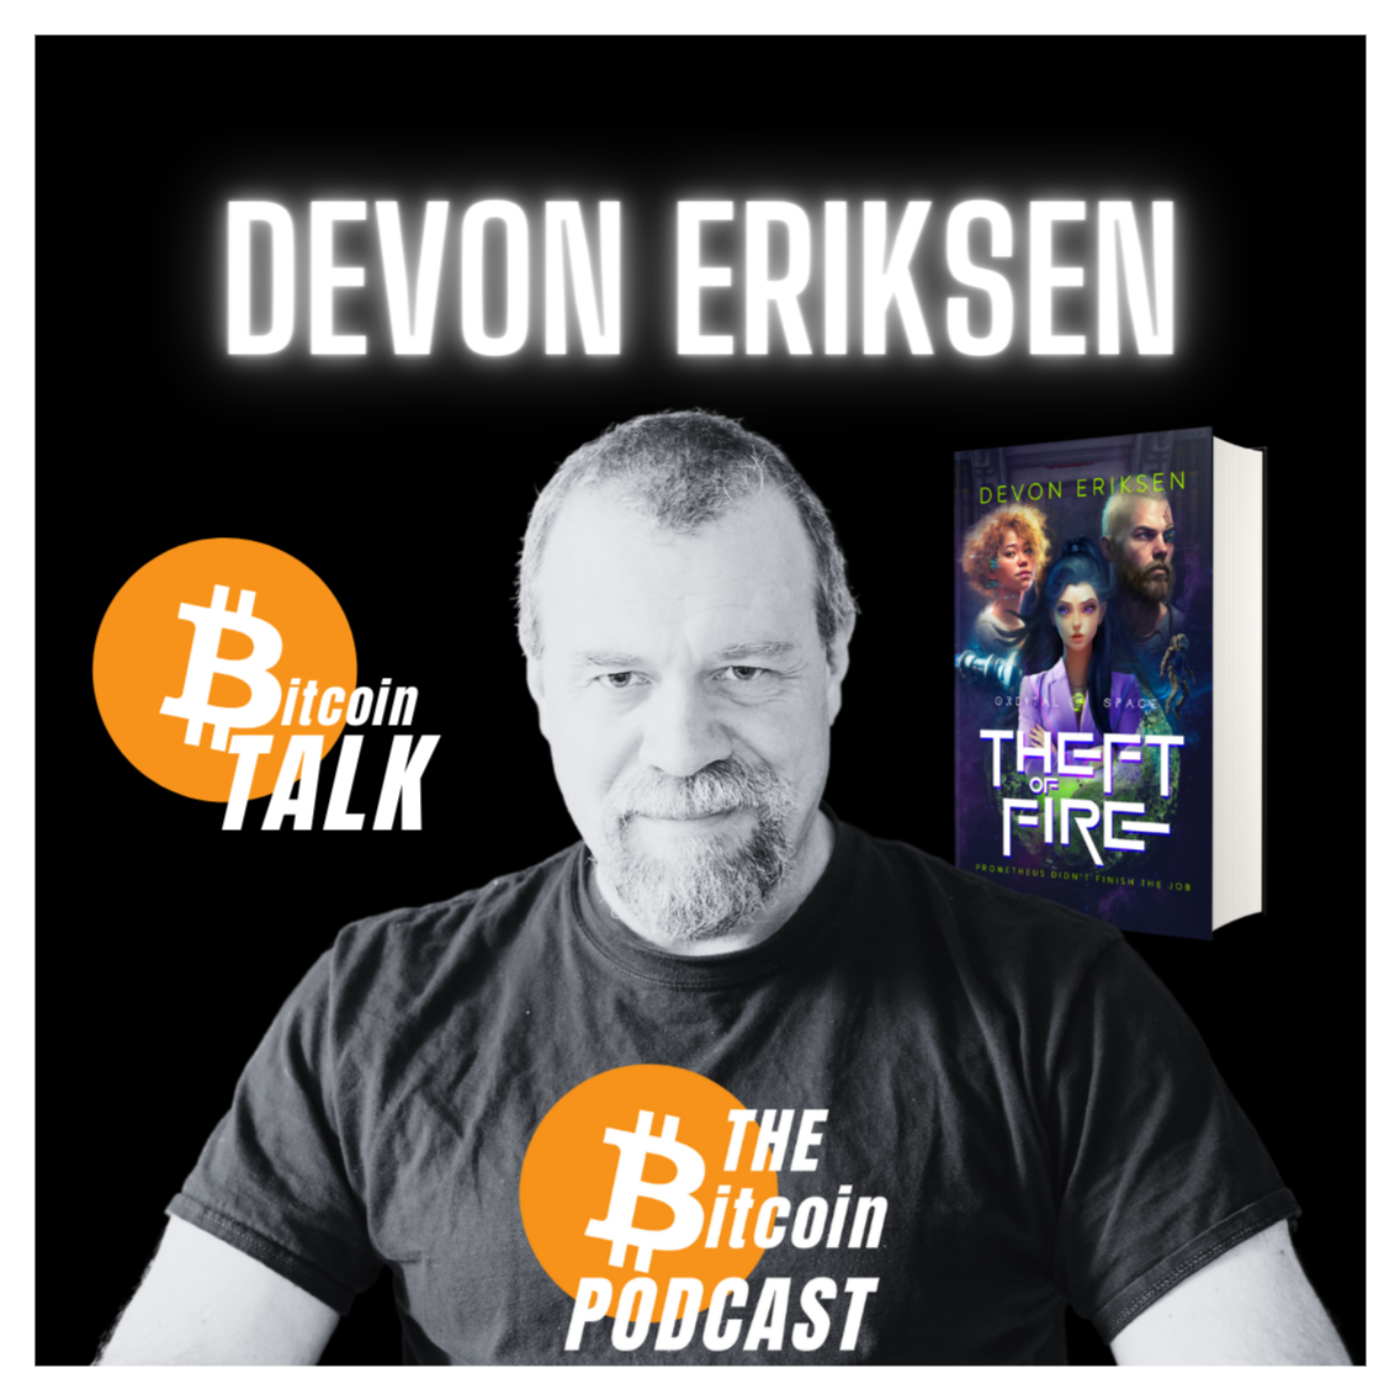 Science Fiction, Culture, Decentralization, AI & F*cks Given - Devon Eriksen (Bitcoin Talk on THE Bitcoin Podcast)